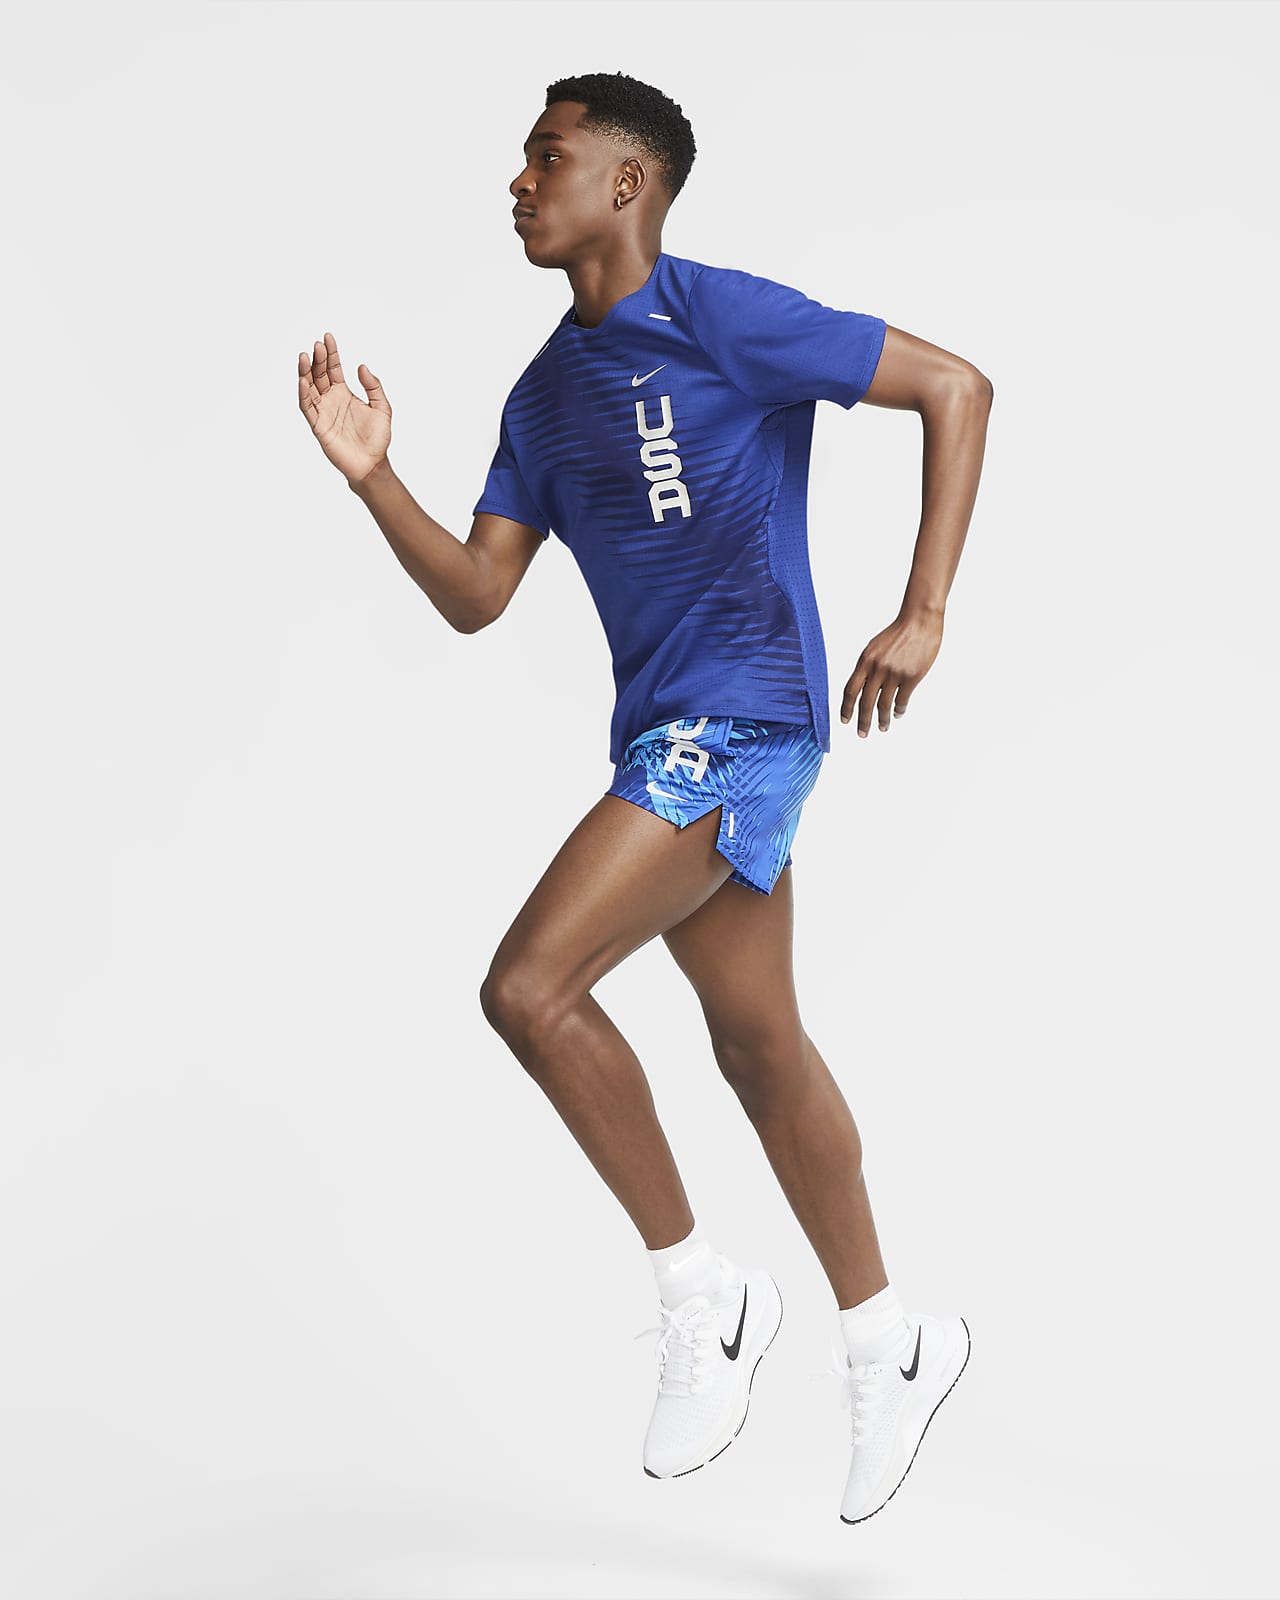 Nike Team USA Flex Stride Men's Running Shorts